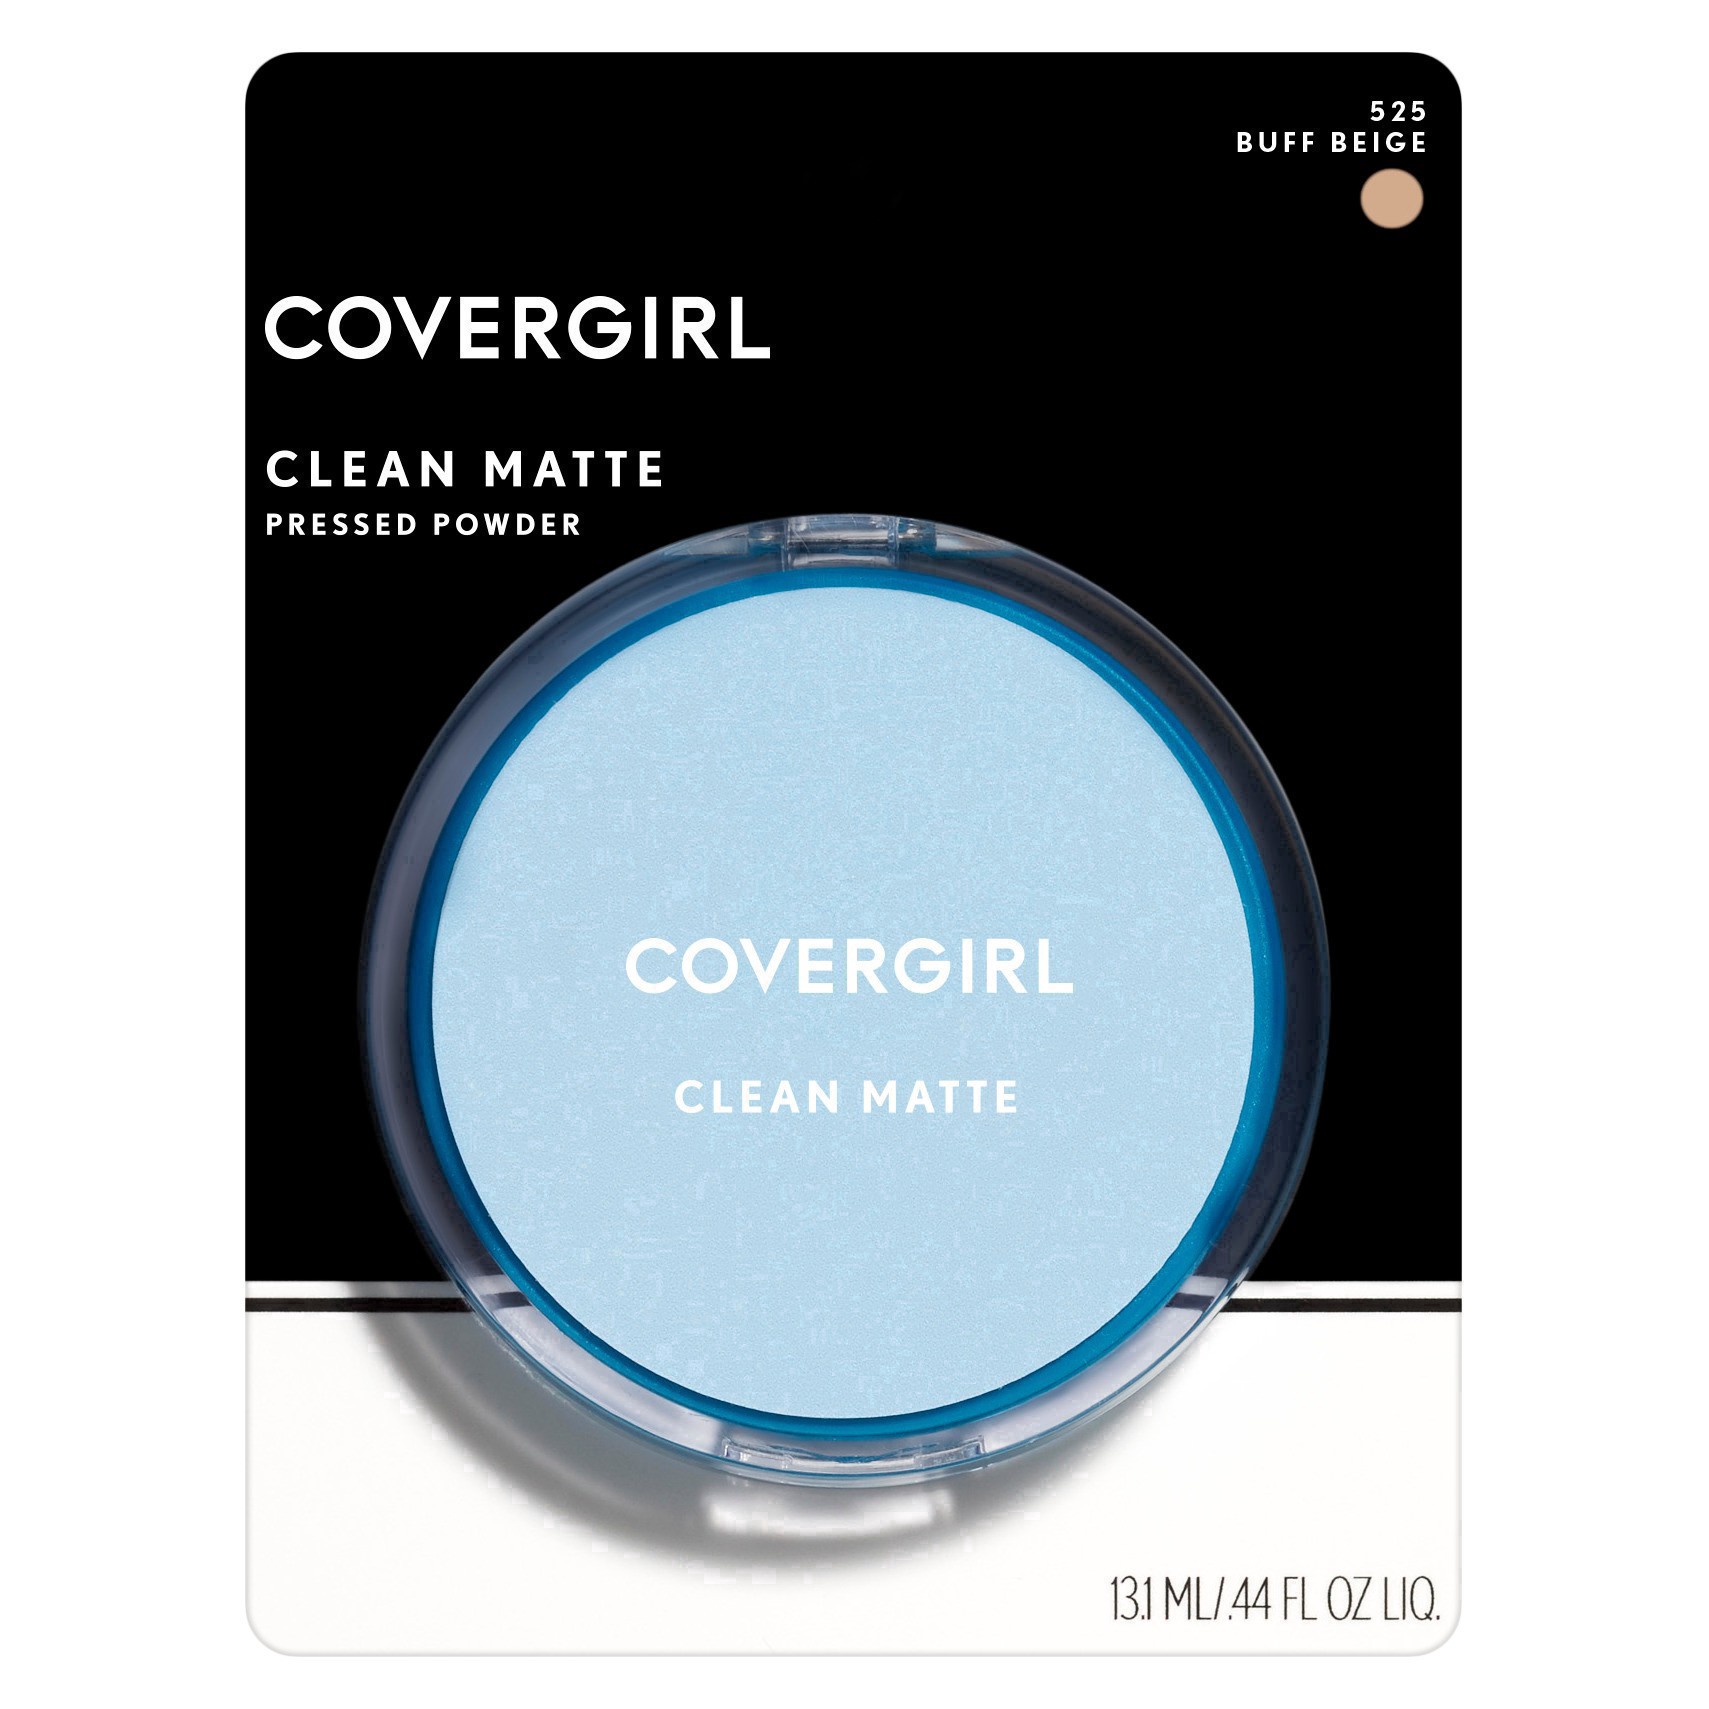 slide 17 of 39, Covergirl COVERGIRL Clean Matte Pressed Powder Buff Beige 525, 10 G 0.35 OZ, 10 g